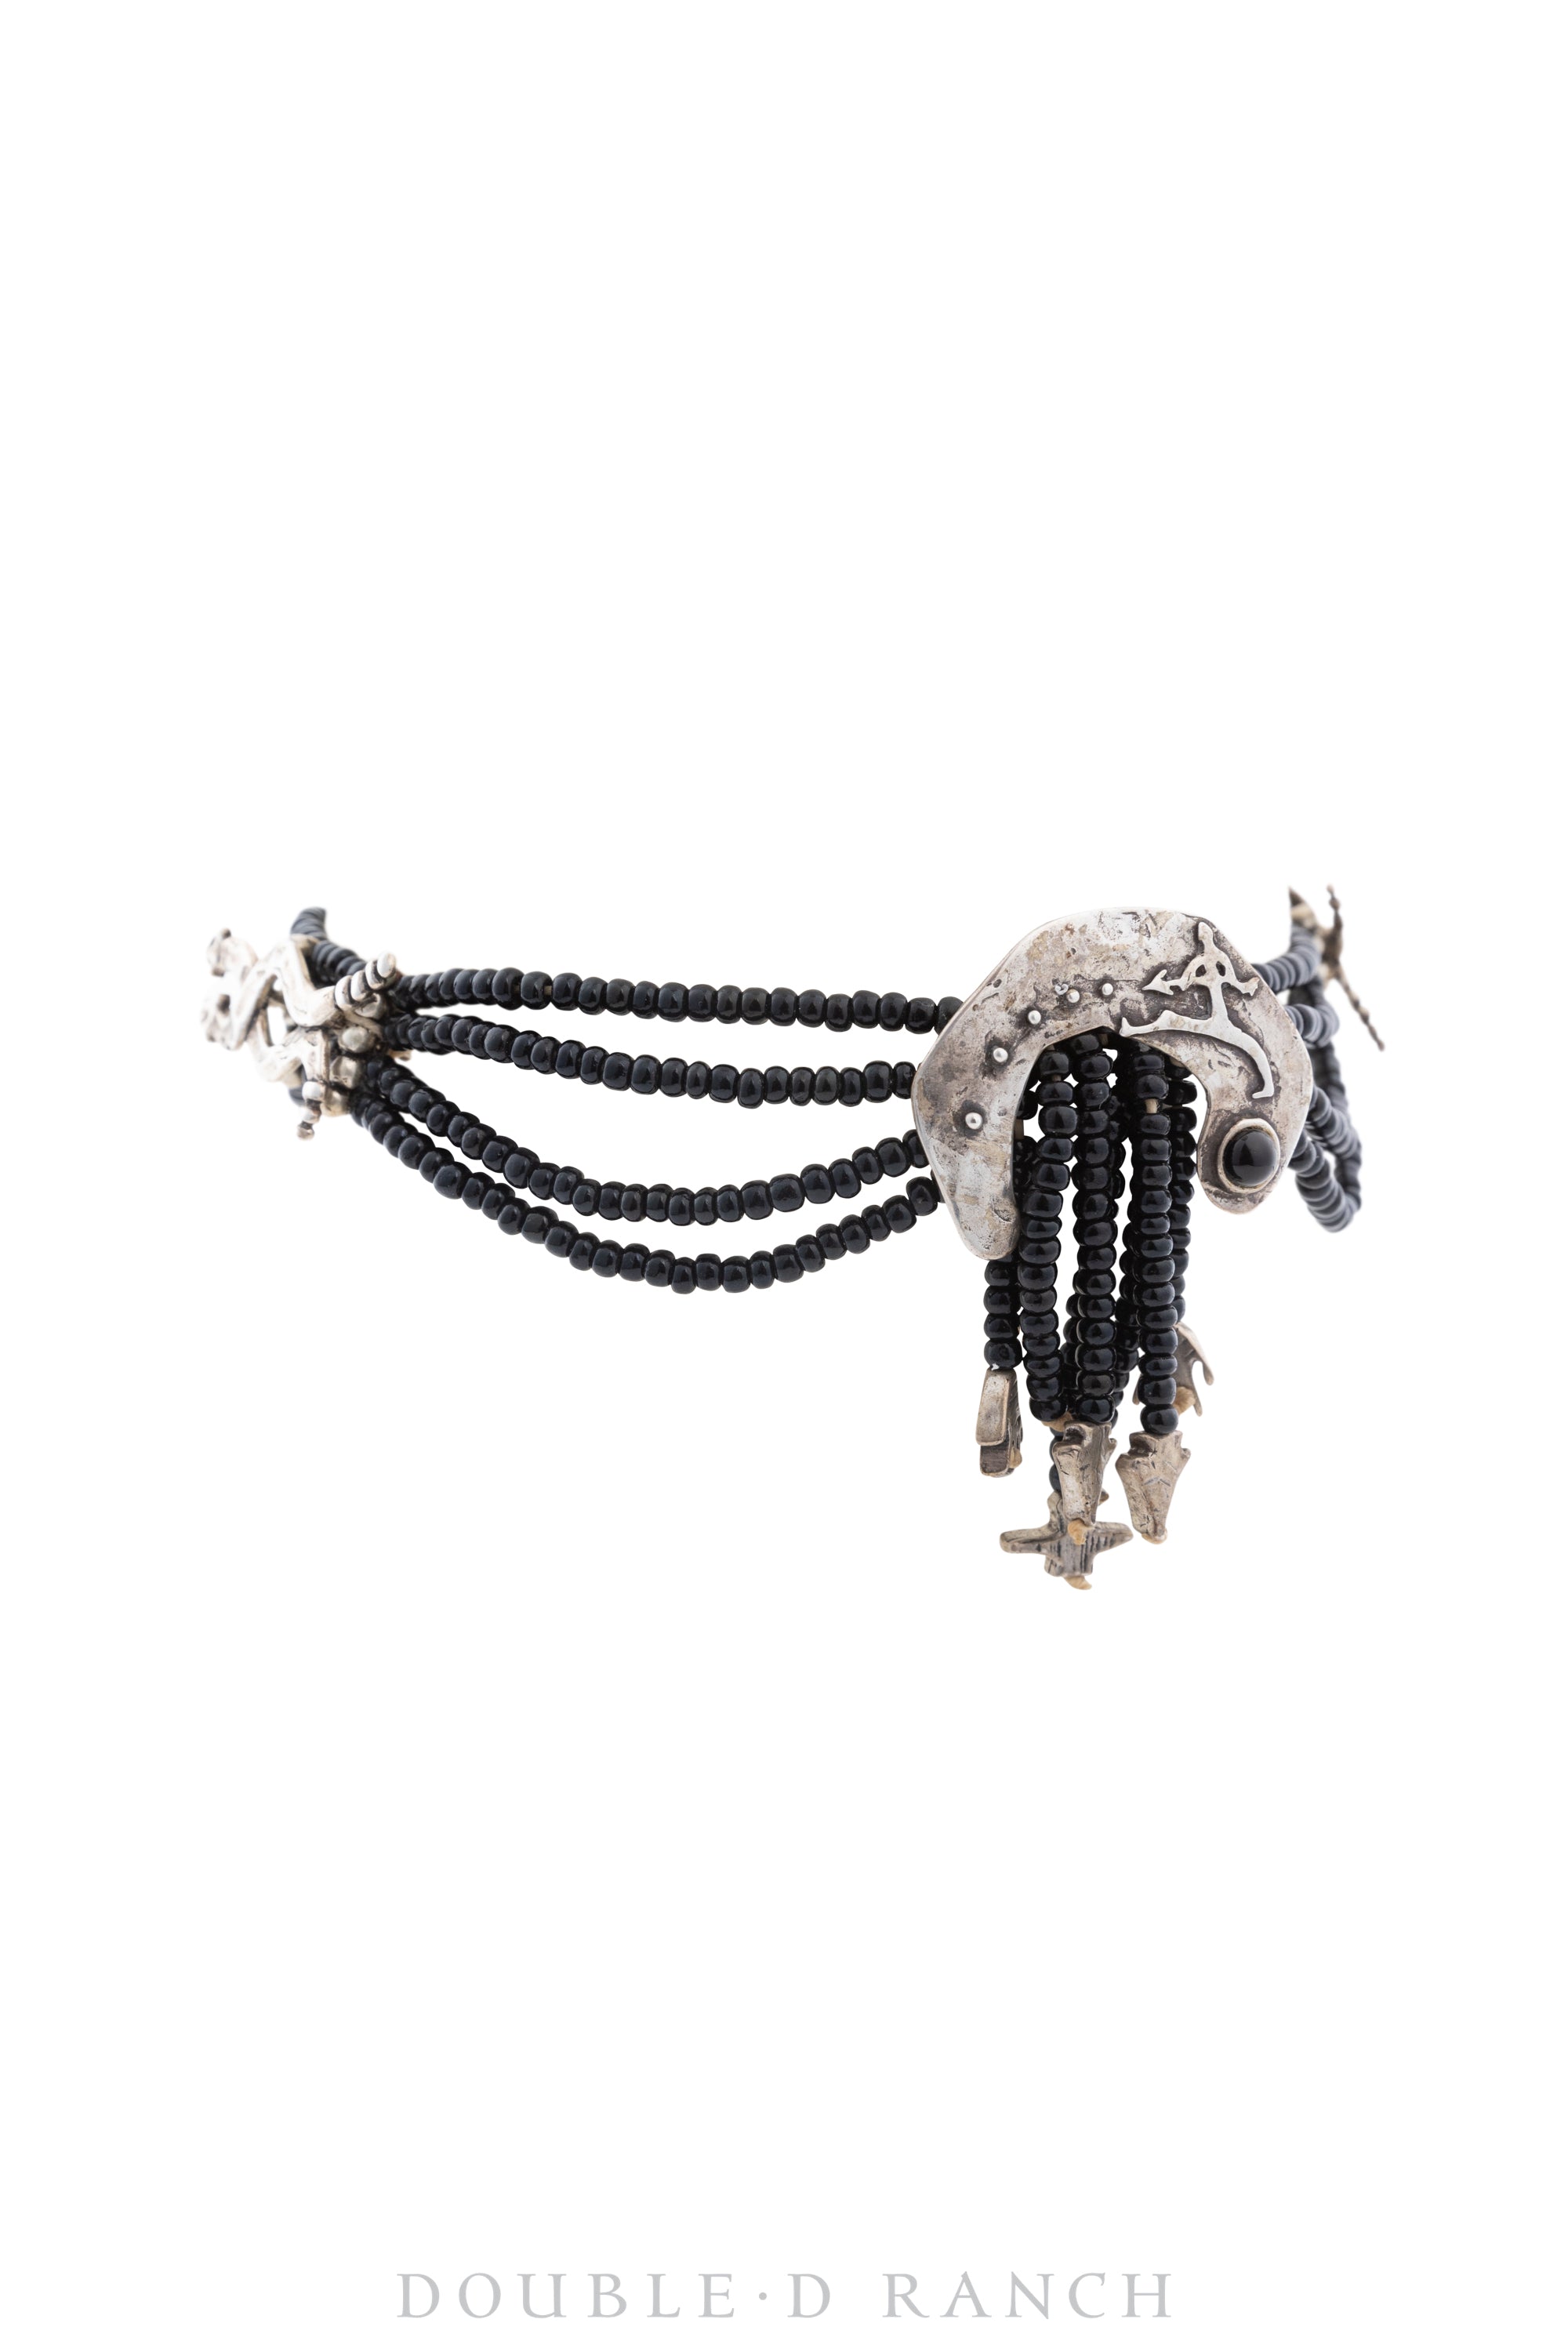 Necklace, Mummy's Bundle, Collar, Black Jet, Prosperity Lizard, Vintage, 3136